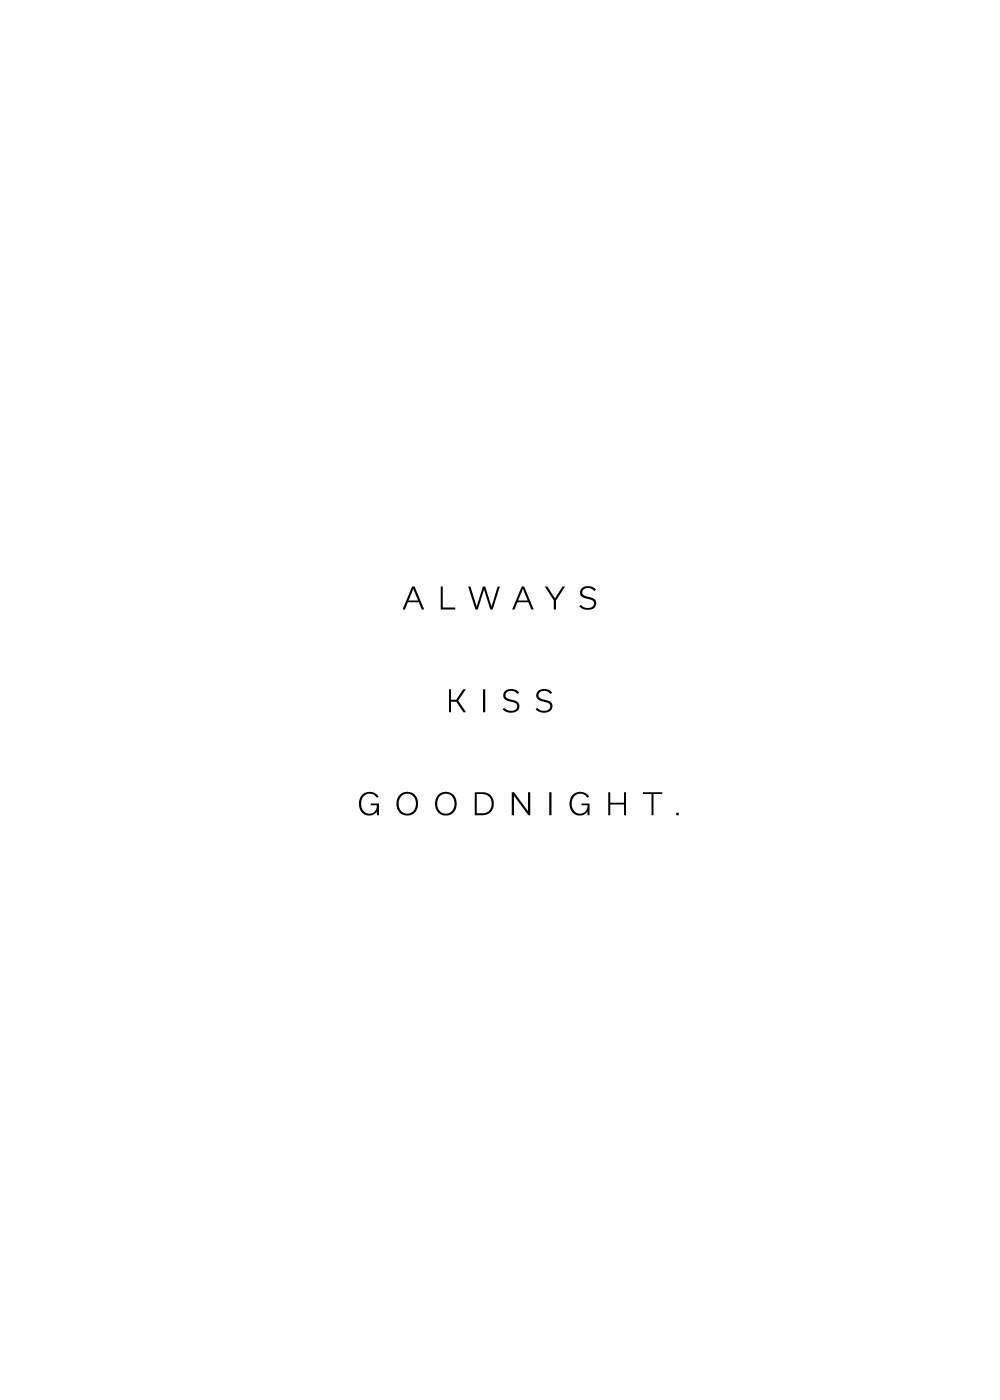 "Always kiss goodnight" citatplakat